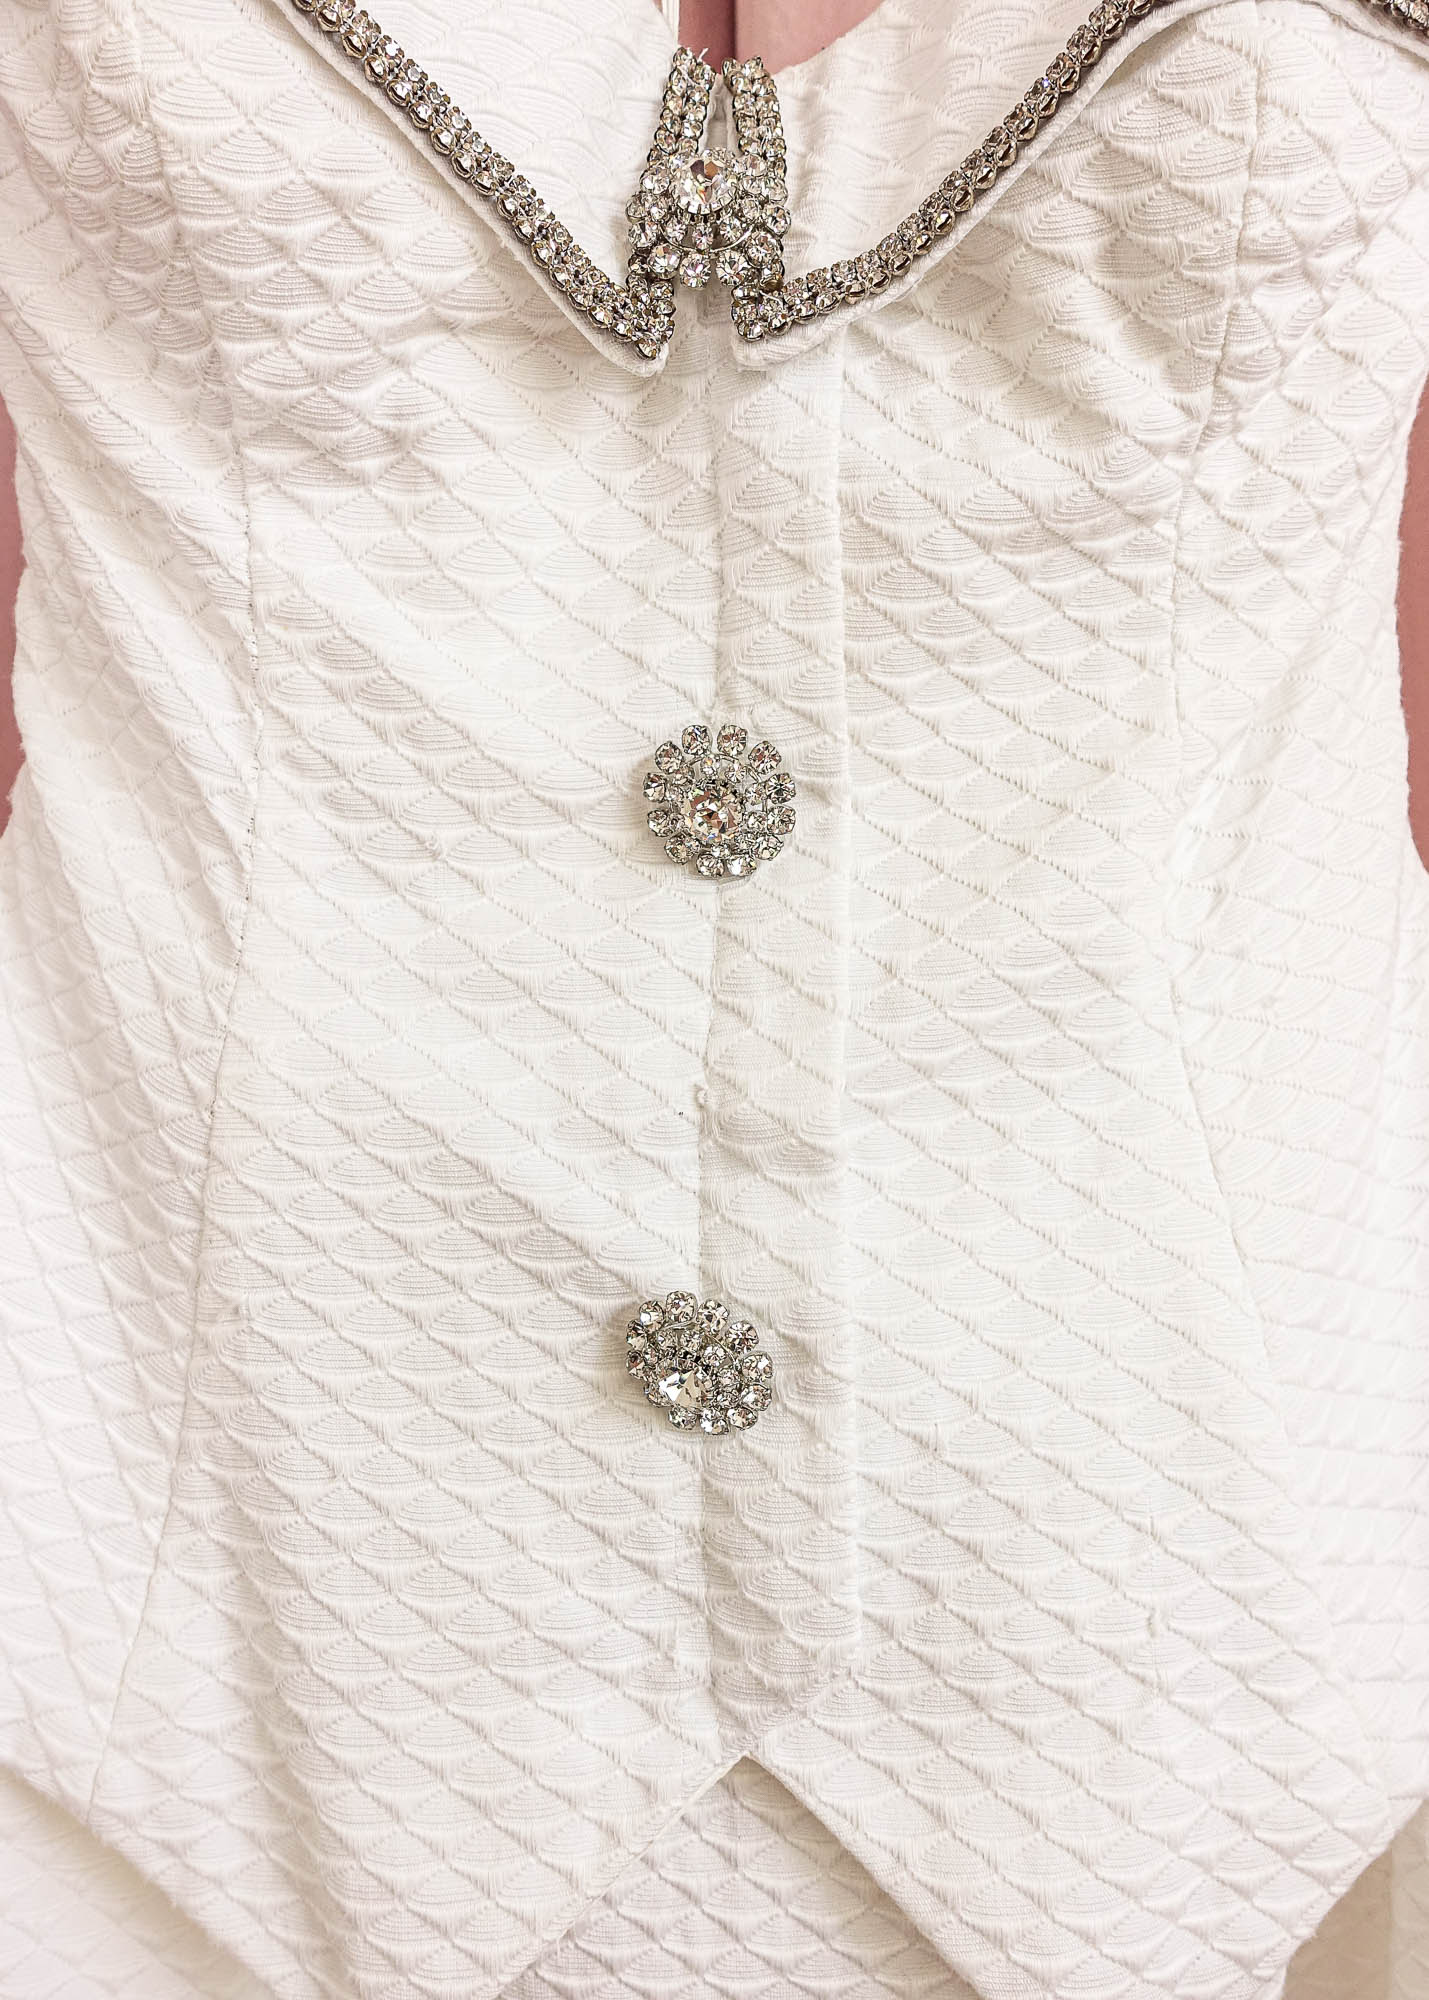 1980s White Strapless Peplum Dress With Rhinestone Buttons